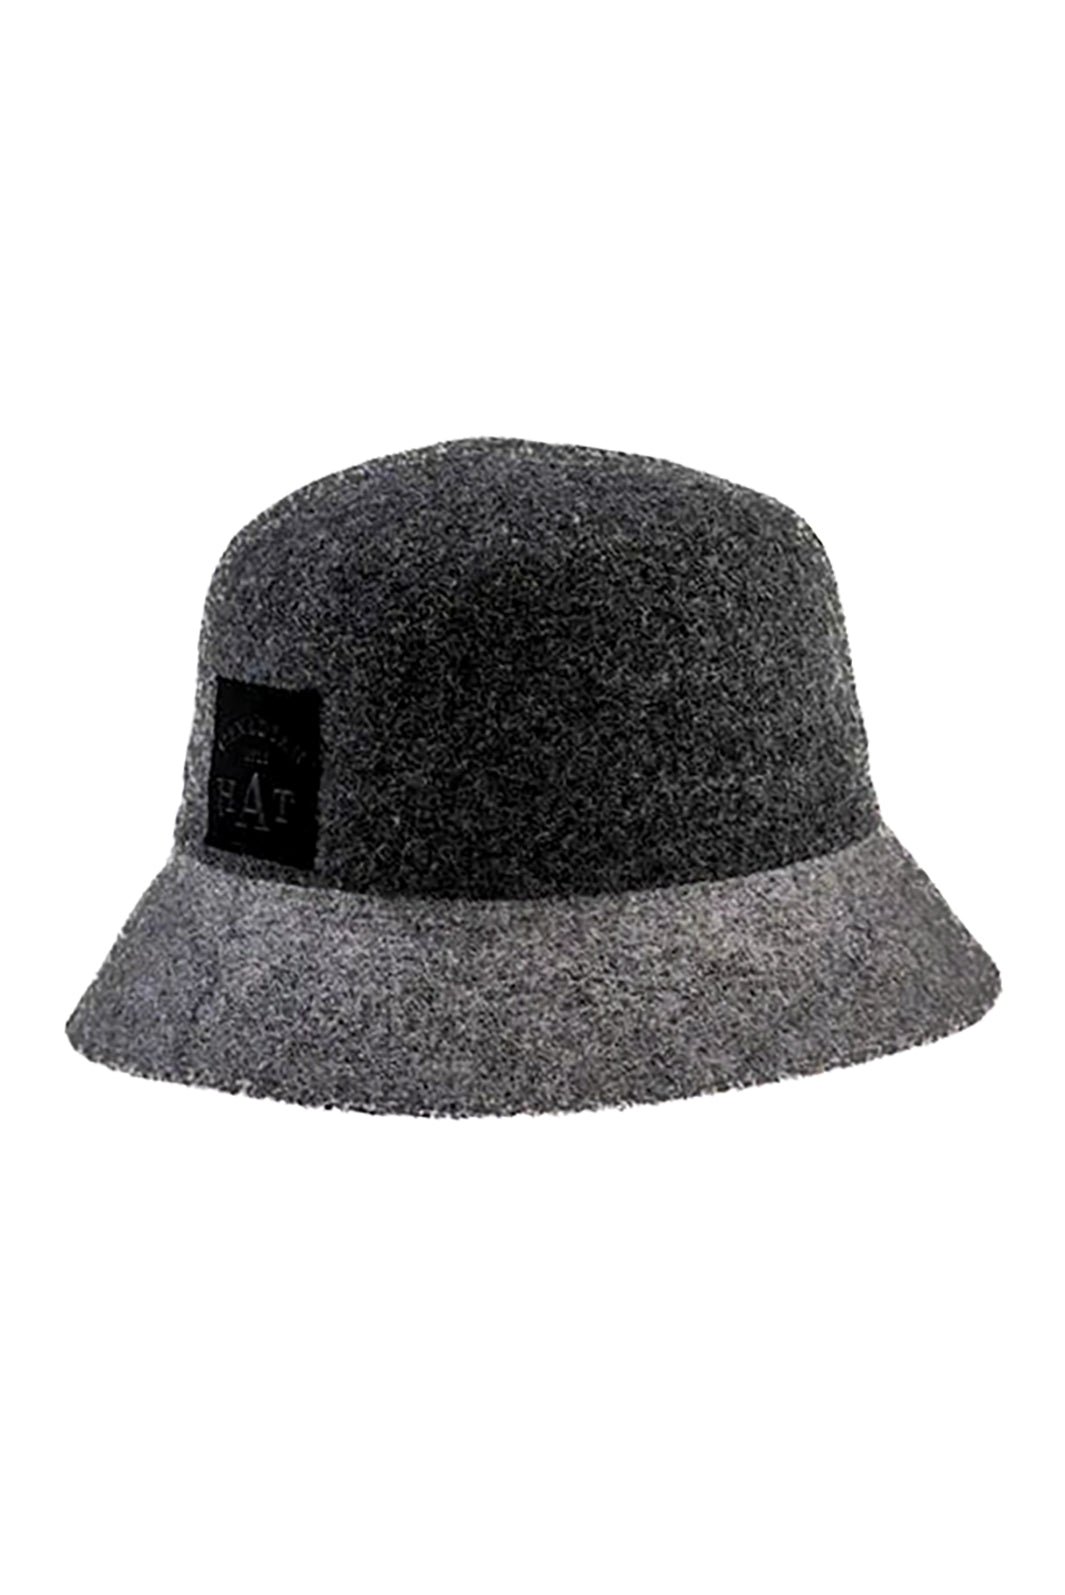 Chapeau Cloche Cybil de Canadian Hat